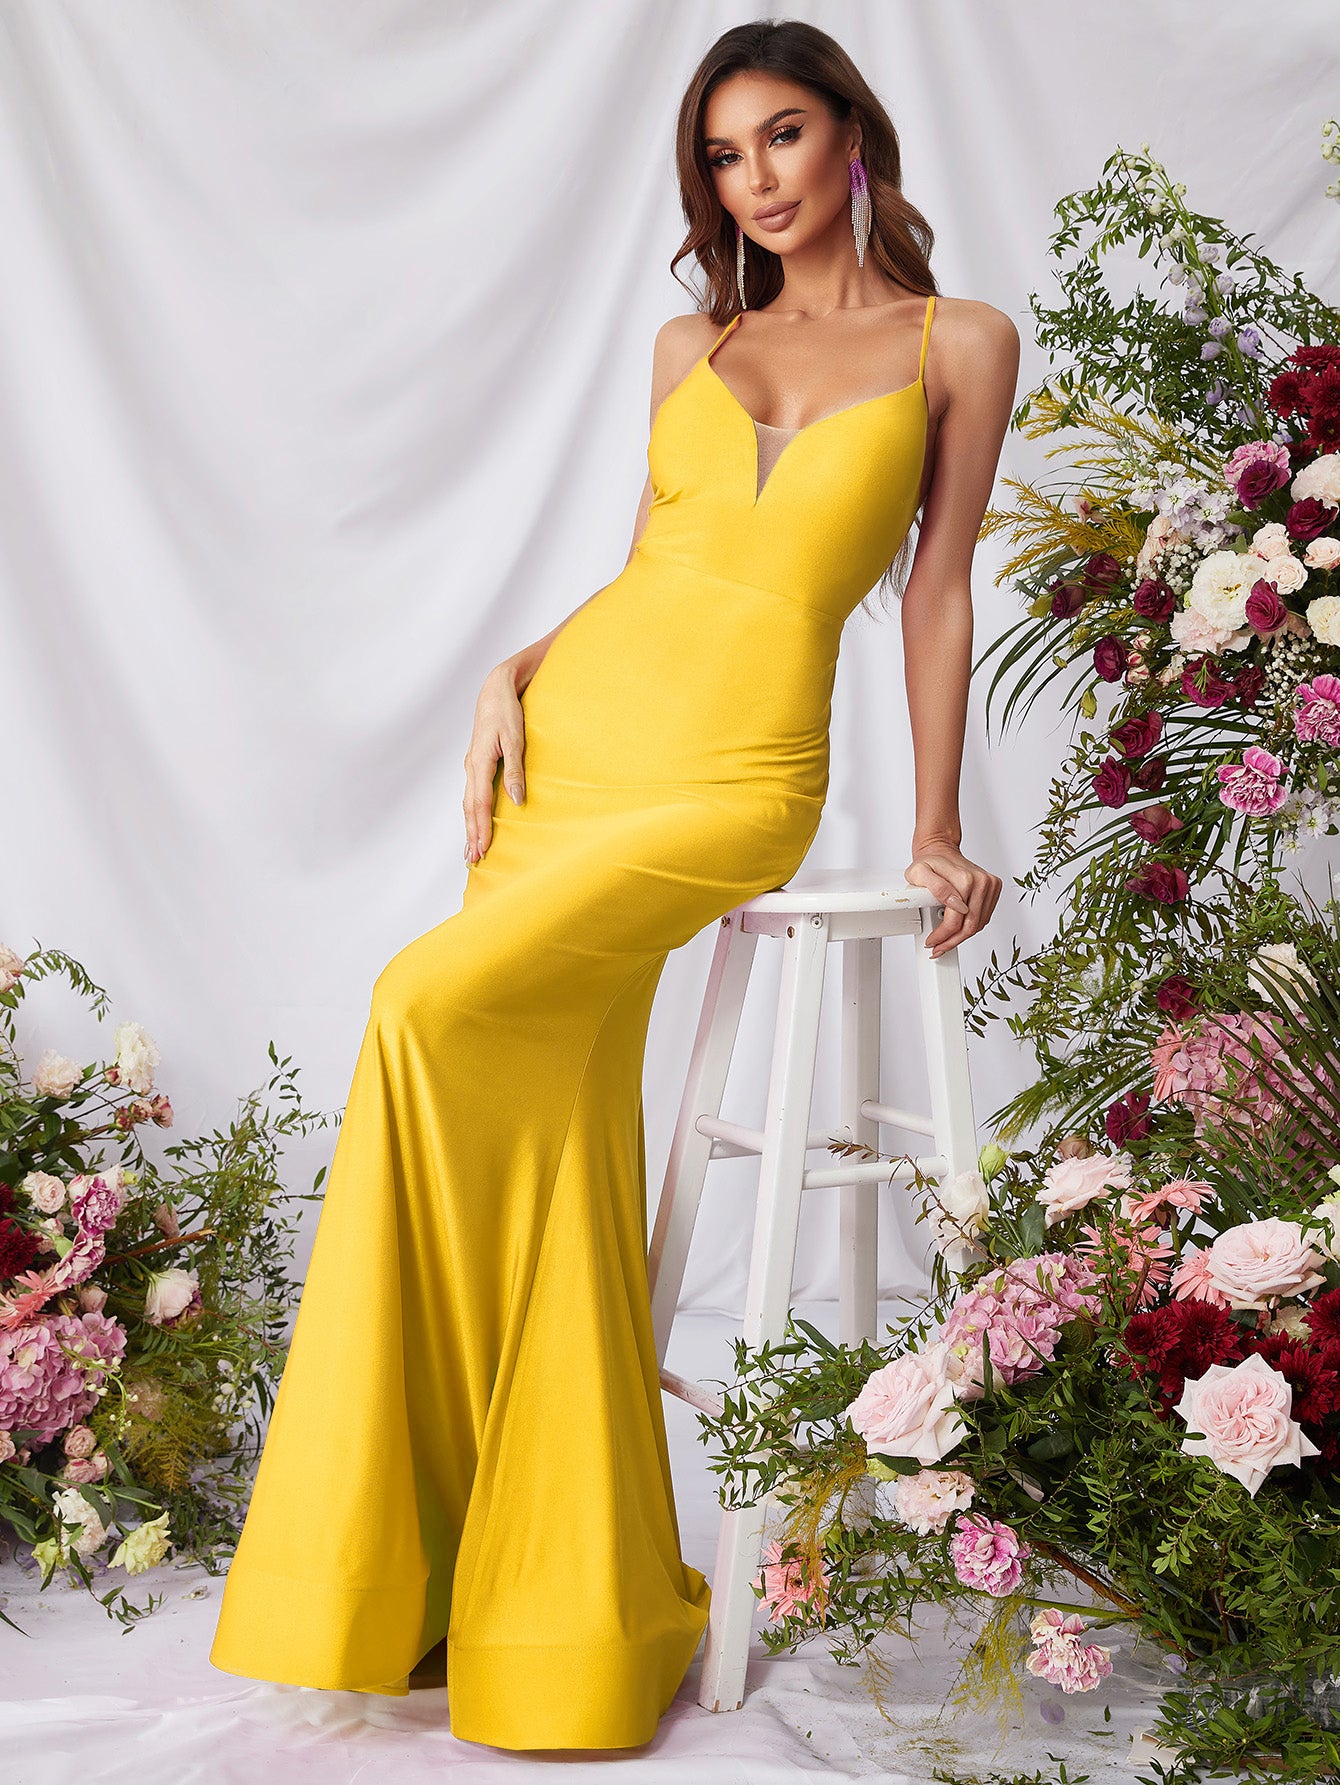 Elegant Spaghetti Strap Mermaid Prom Dress